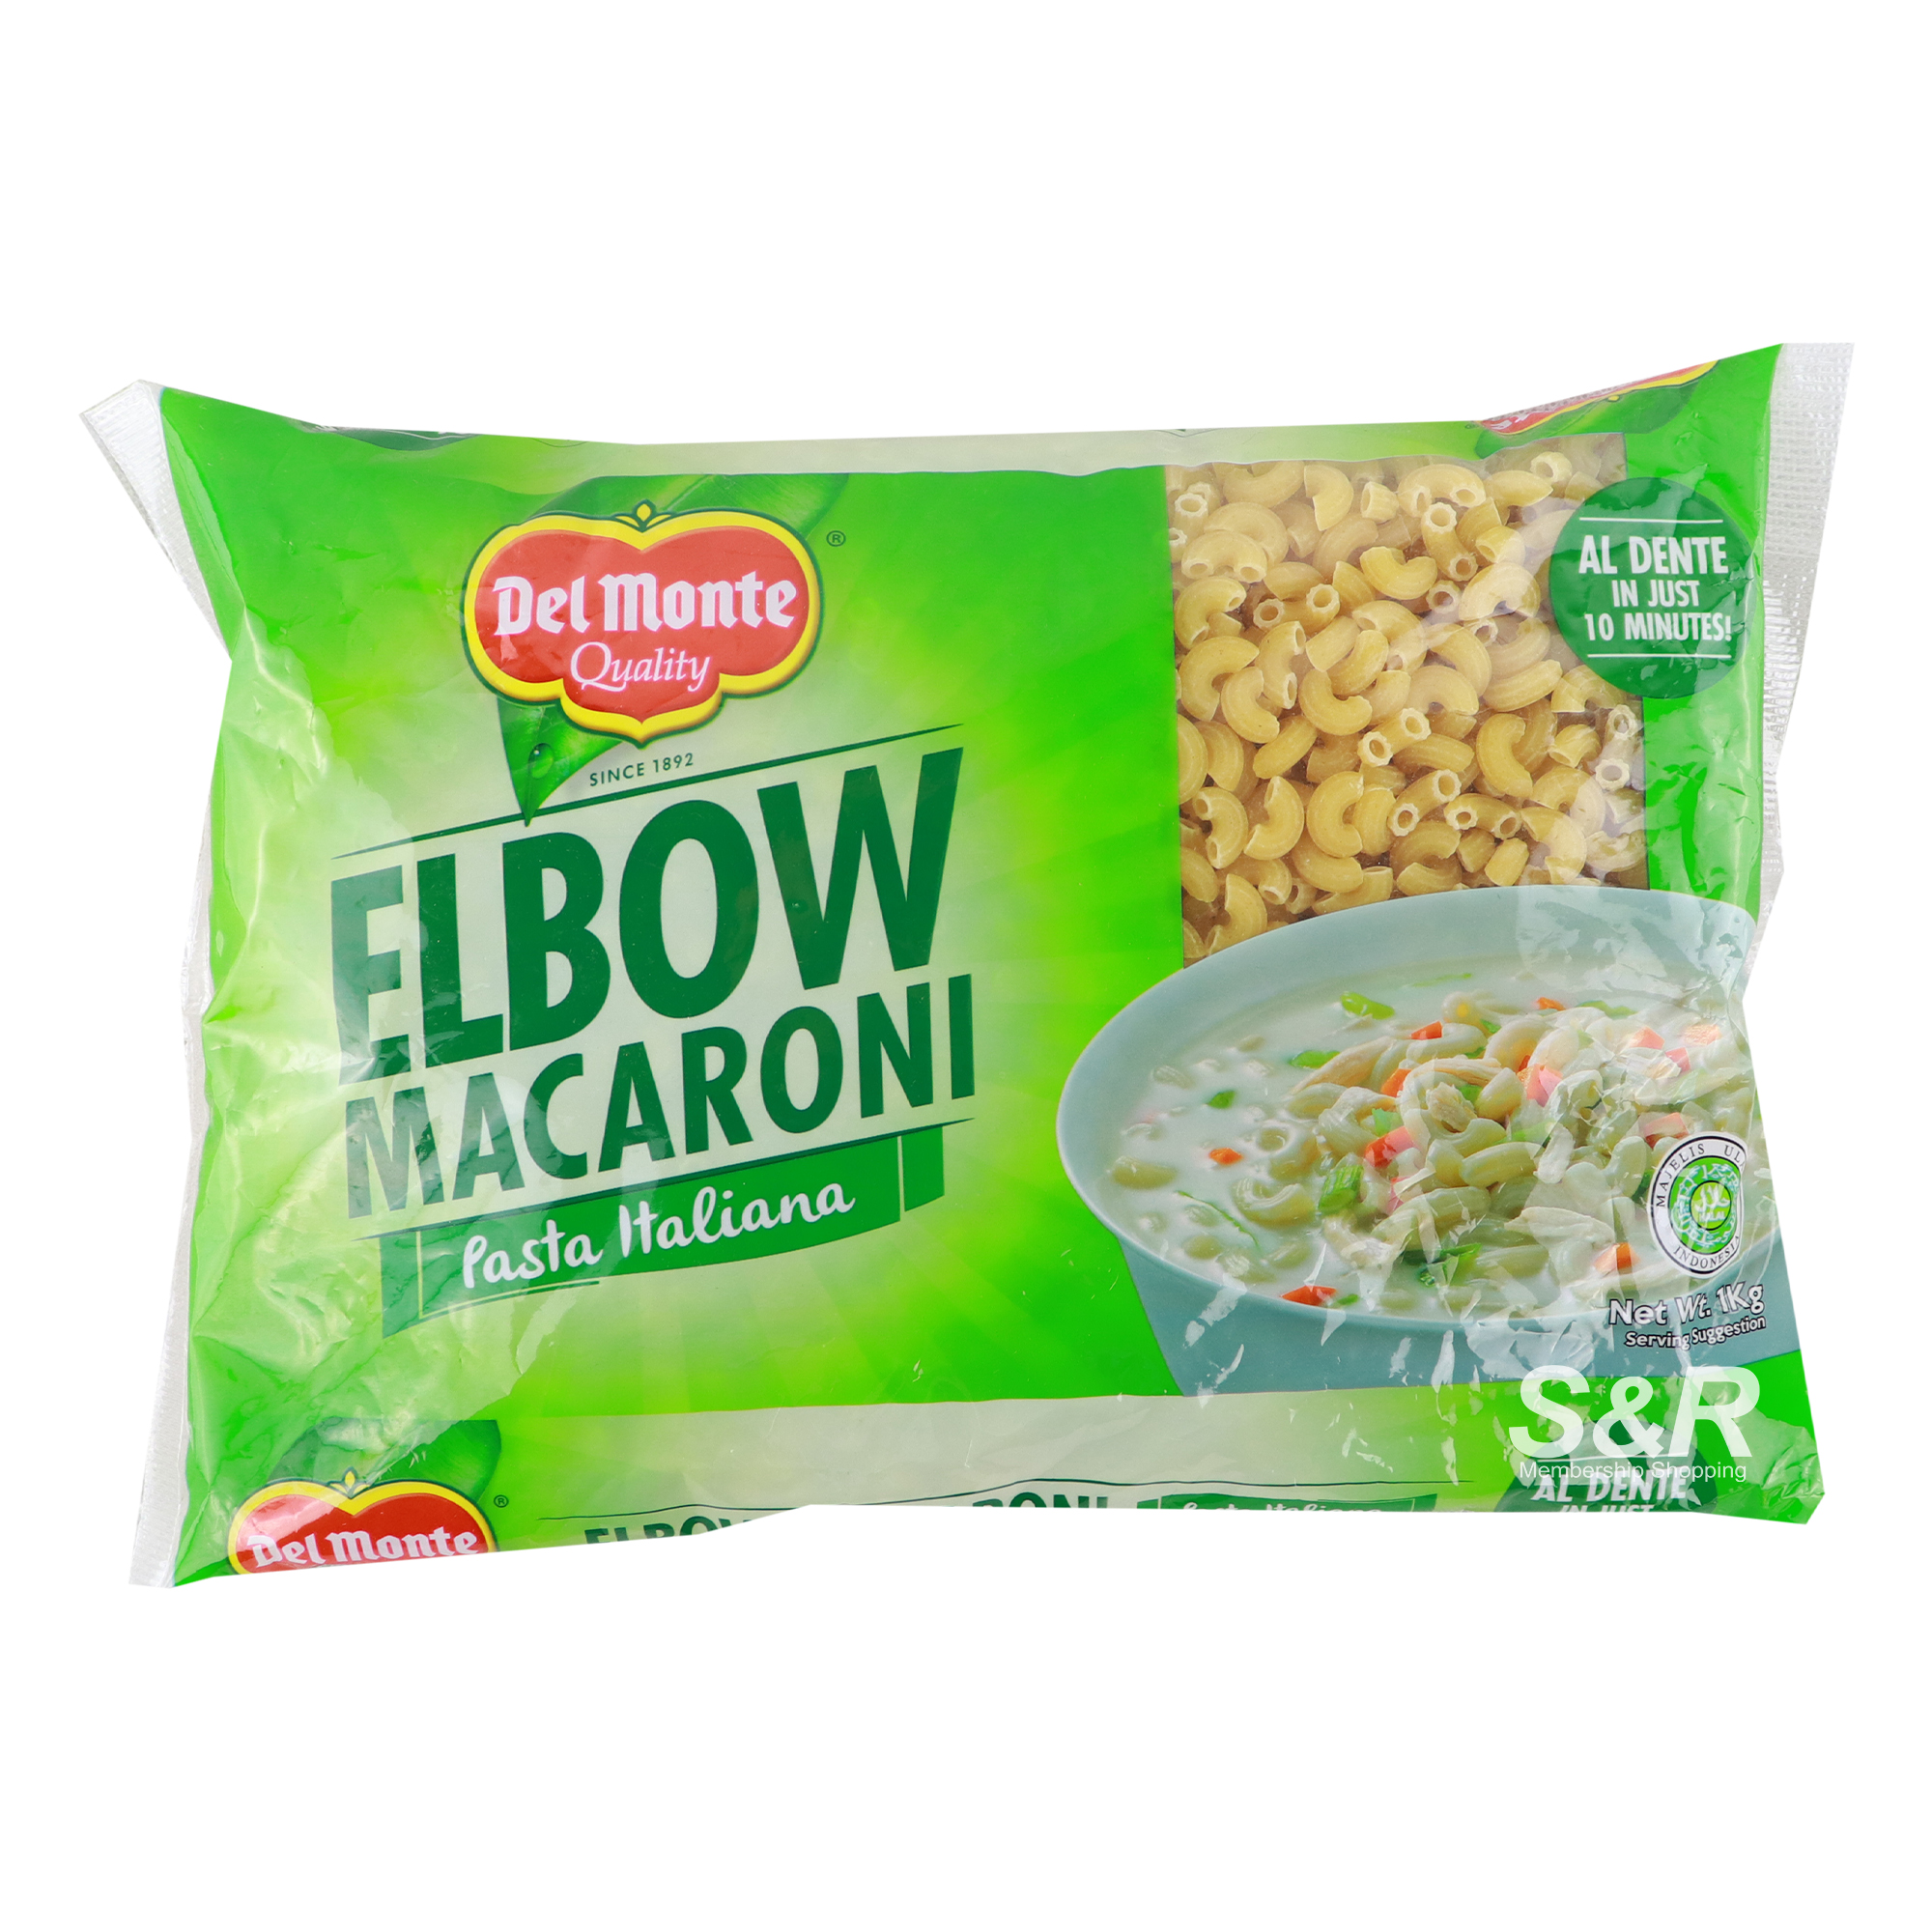 Del Monte Elbow Macaroni Pasta Italiana 1kg